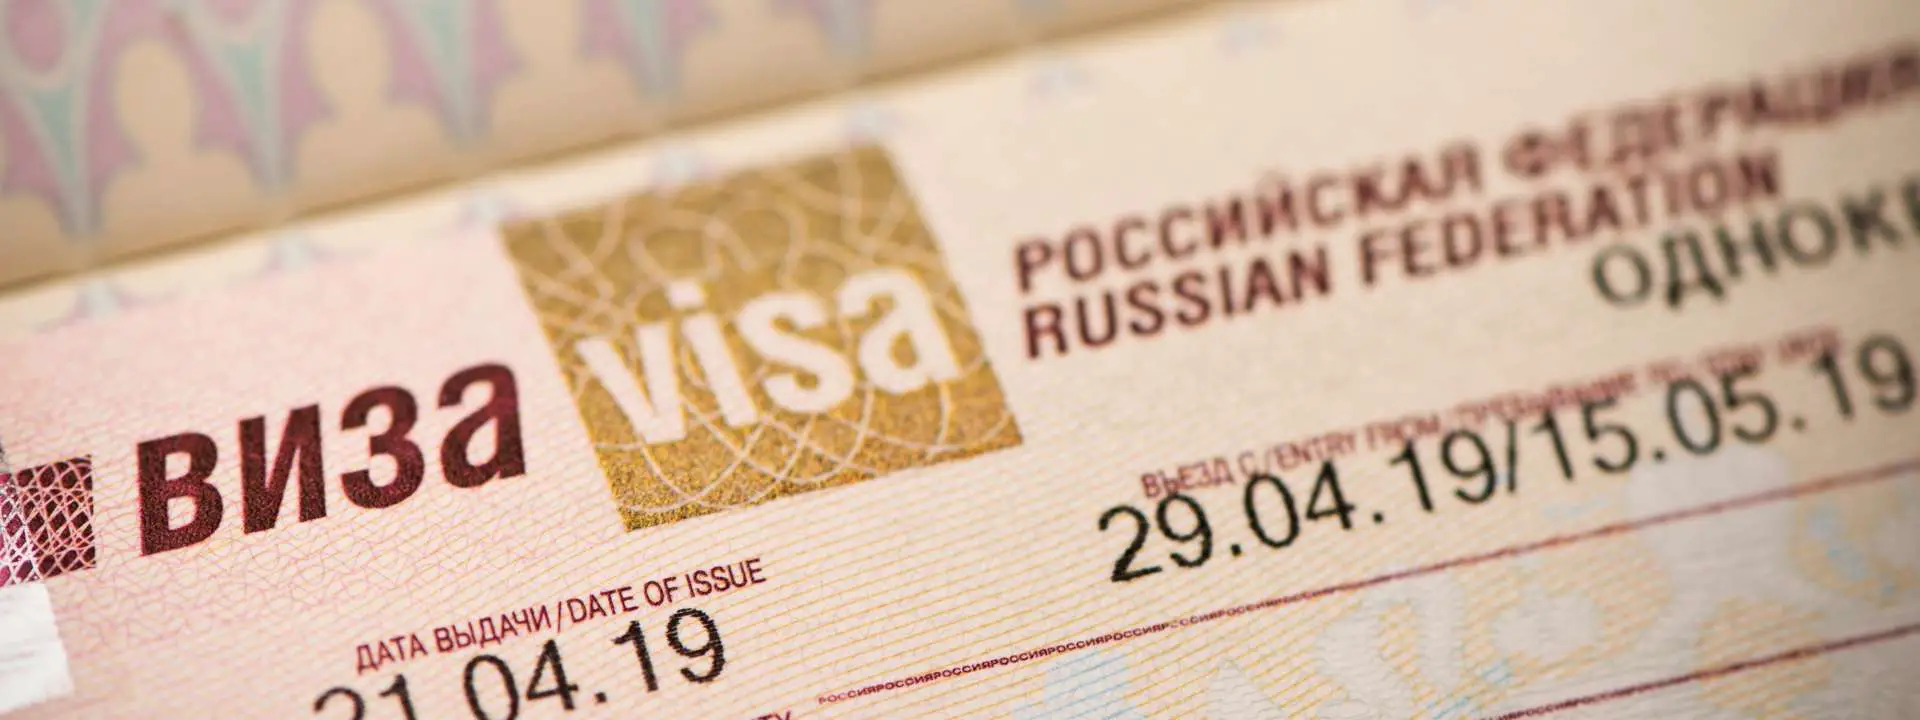 moscow tourist visa